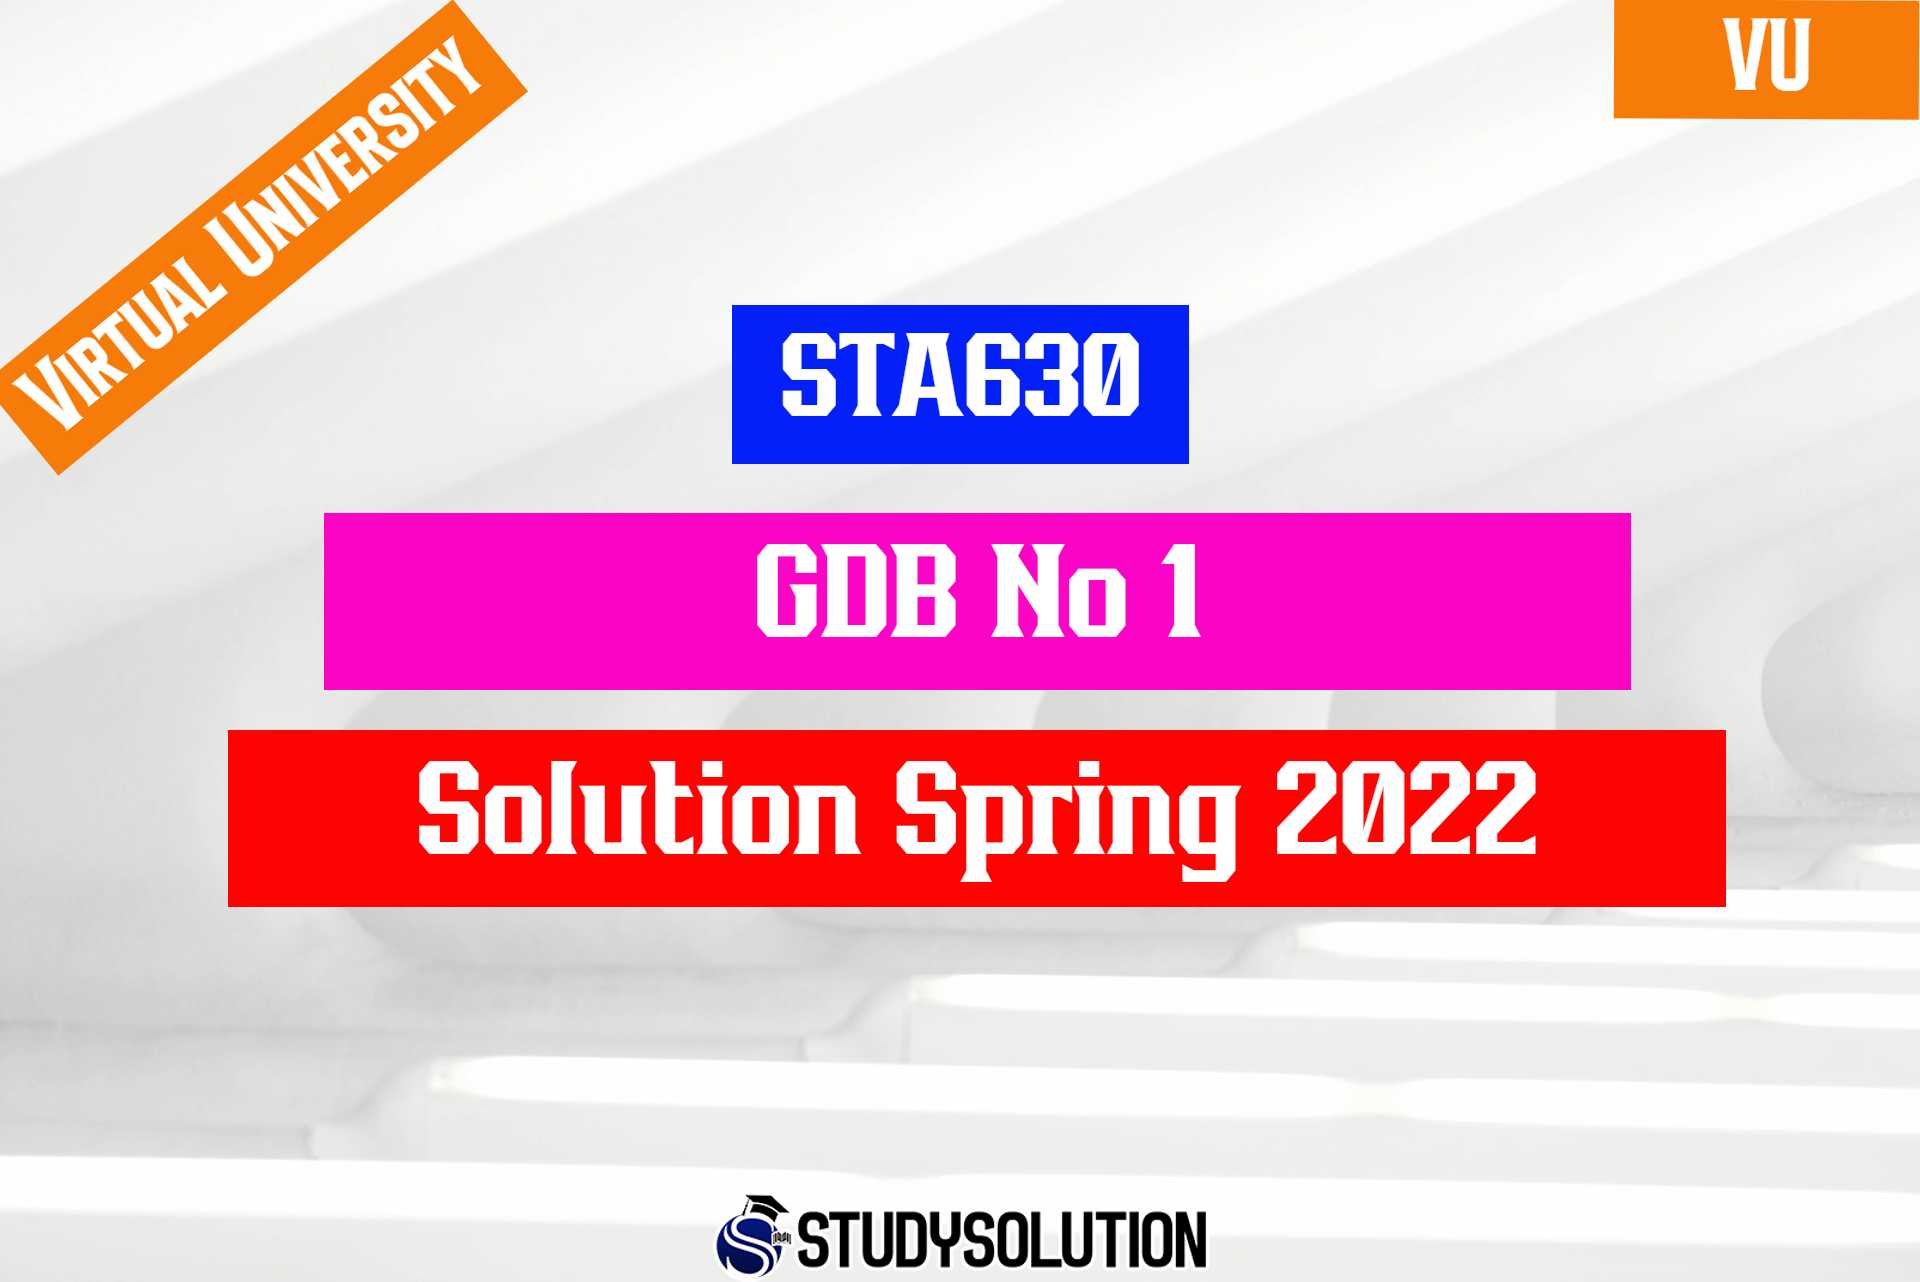 STA630 GDB No 1 Solution Spring 2022